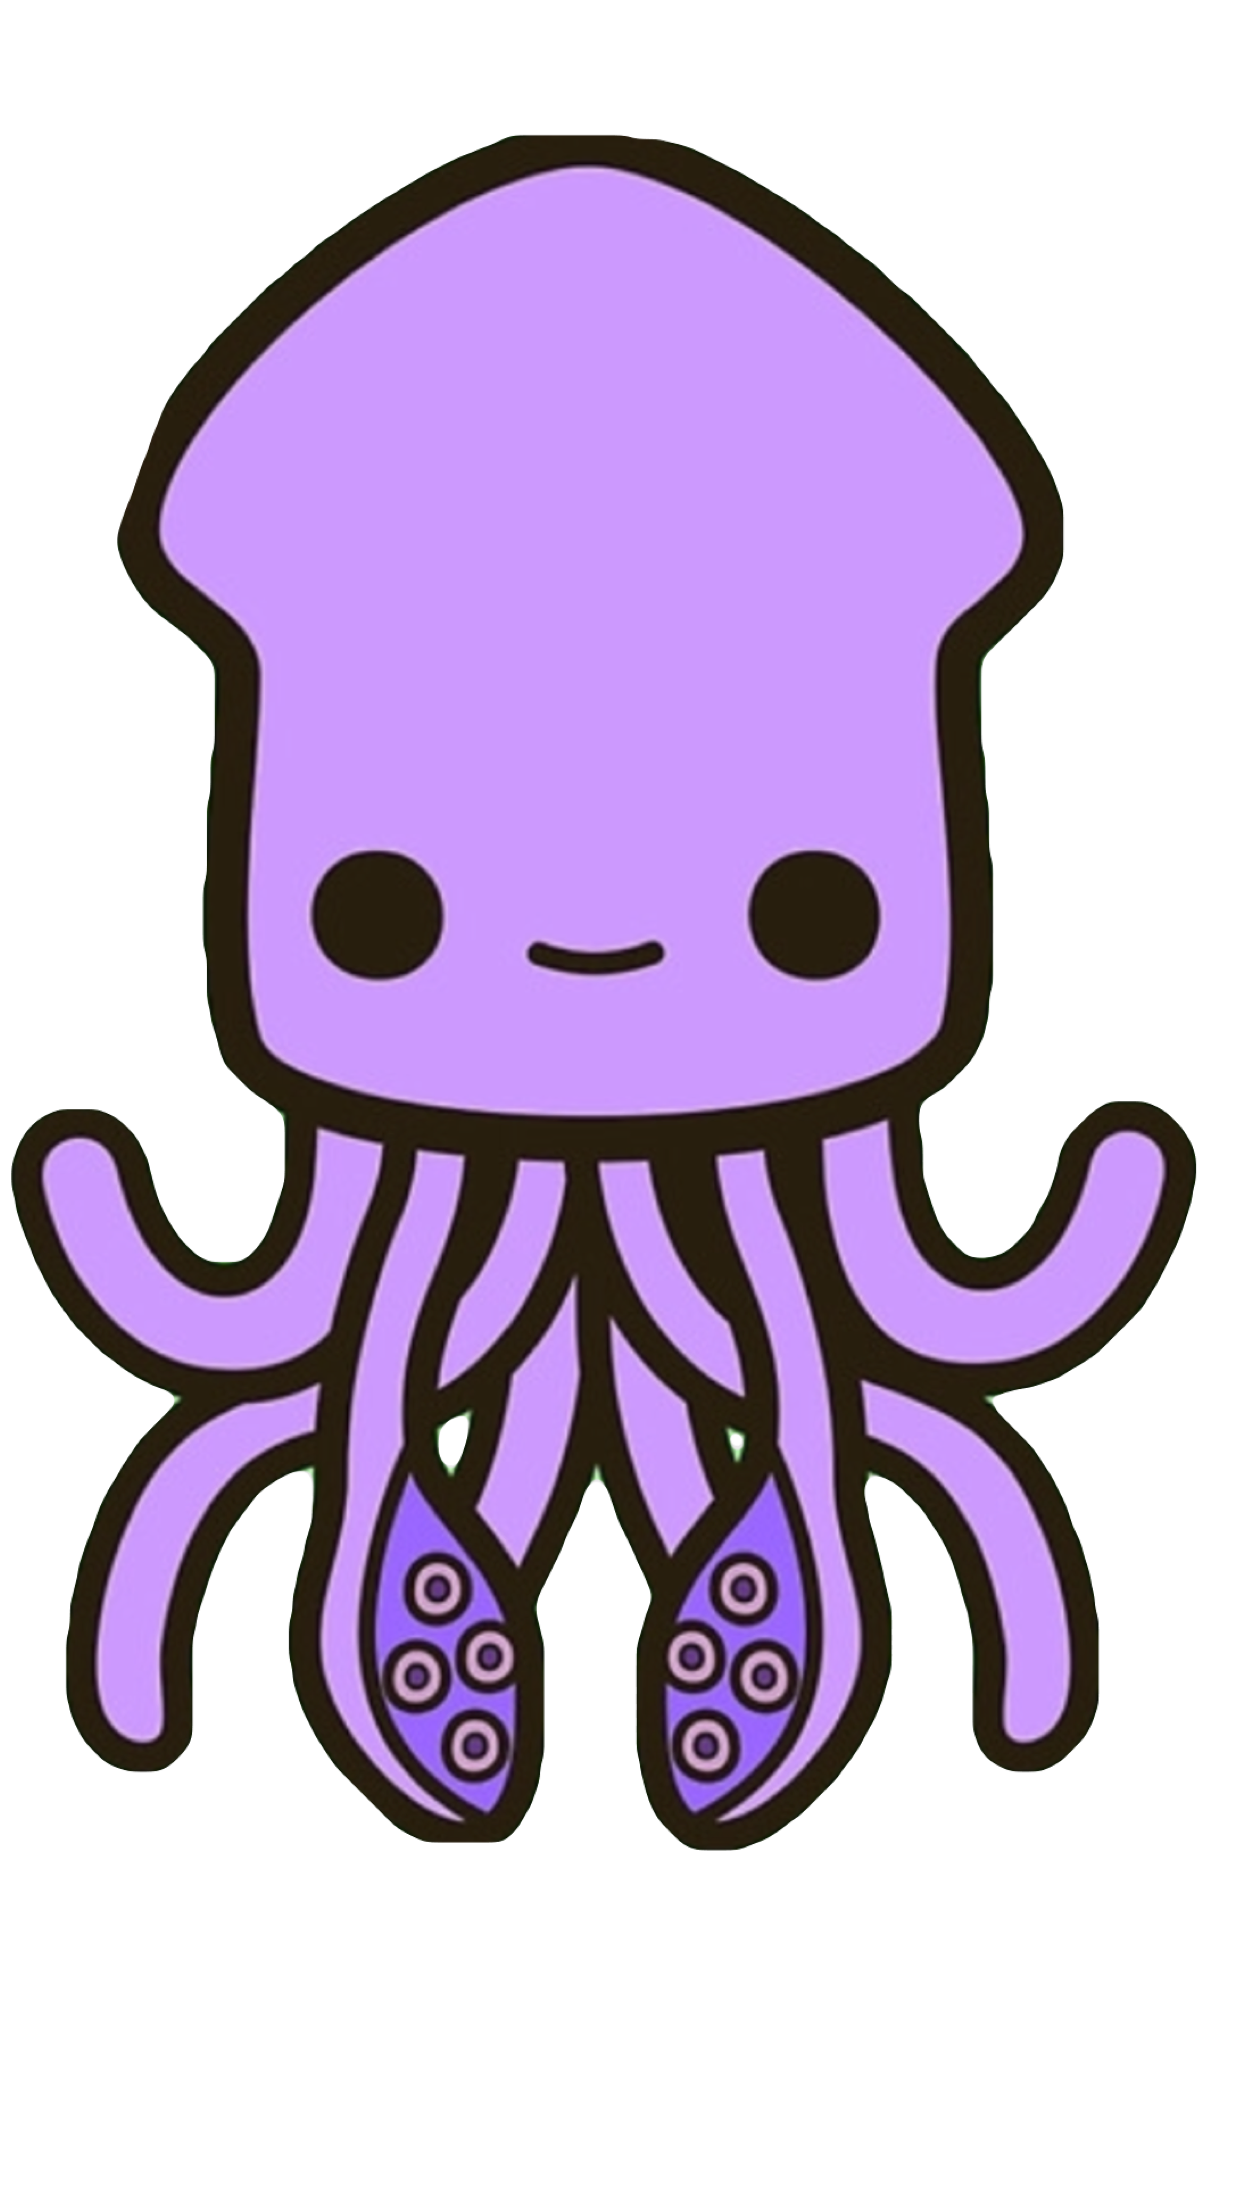 octopus clipart violet